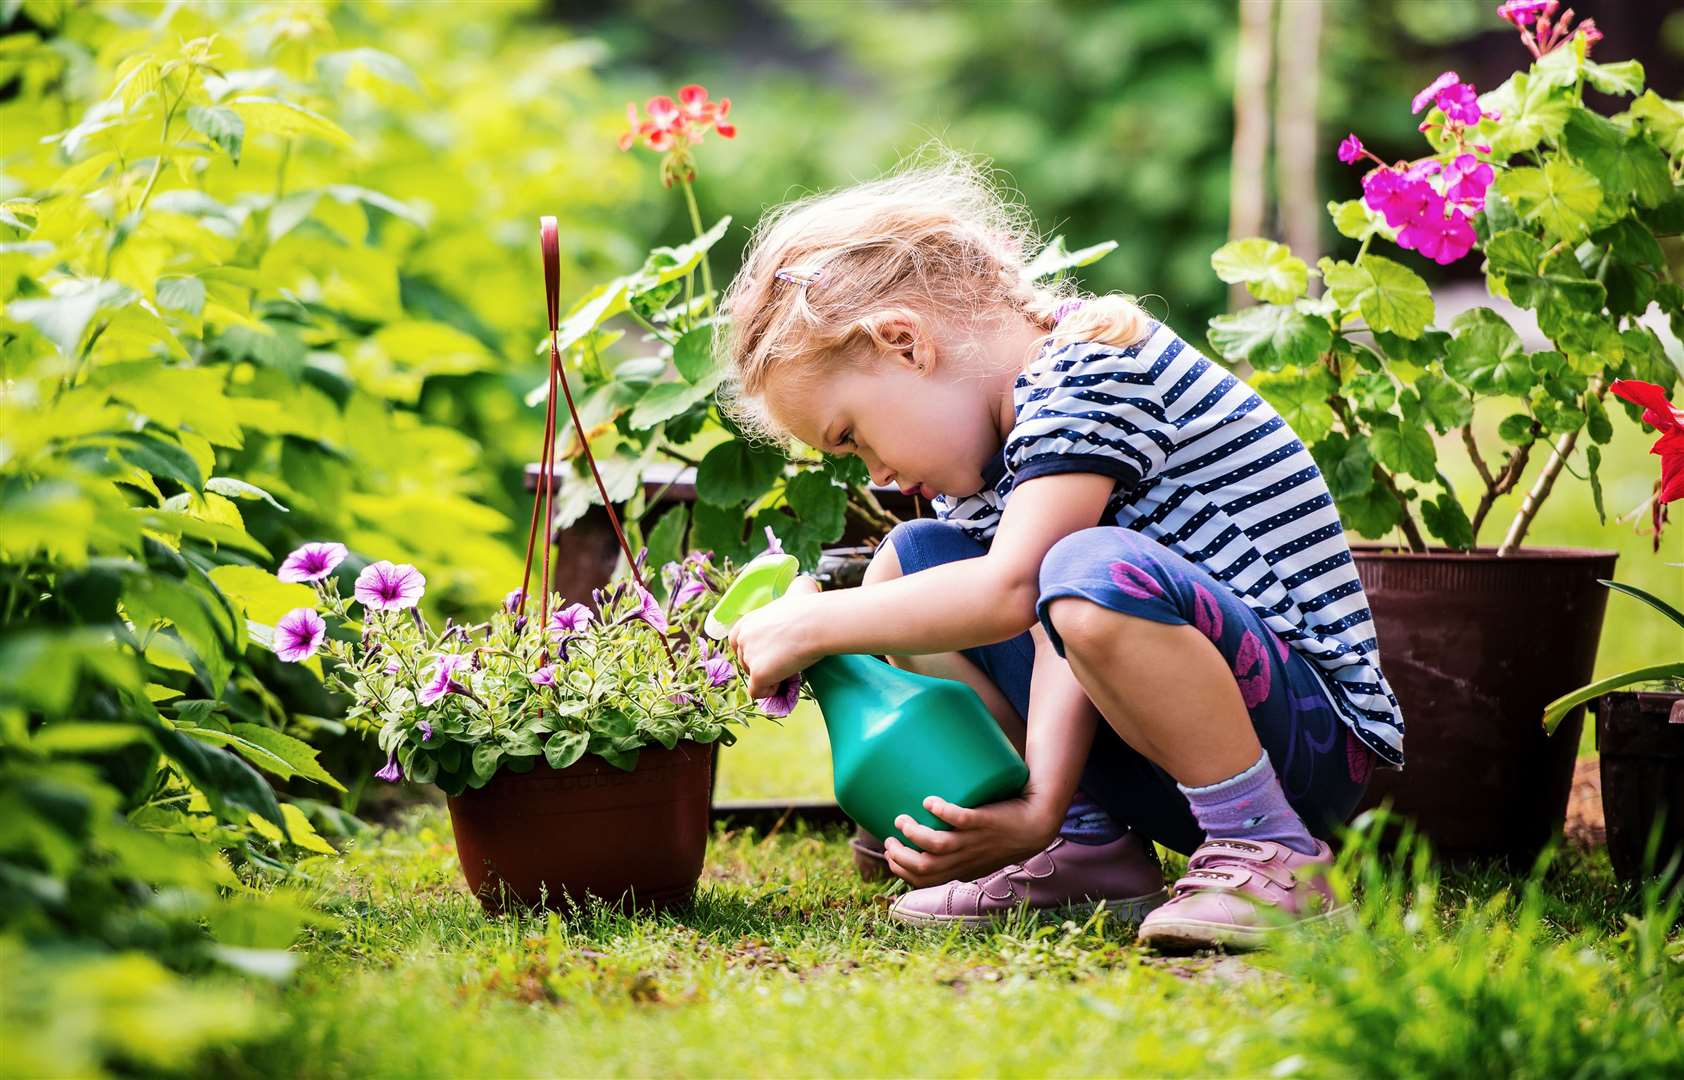 Children love to explore in the garden. Picture: iStock/PA